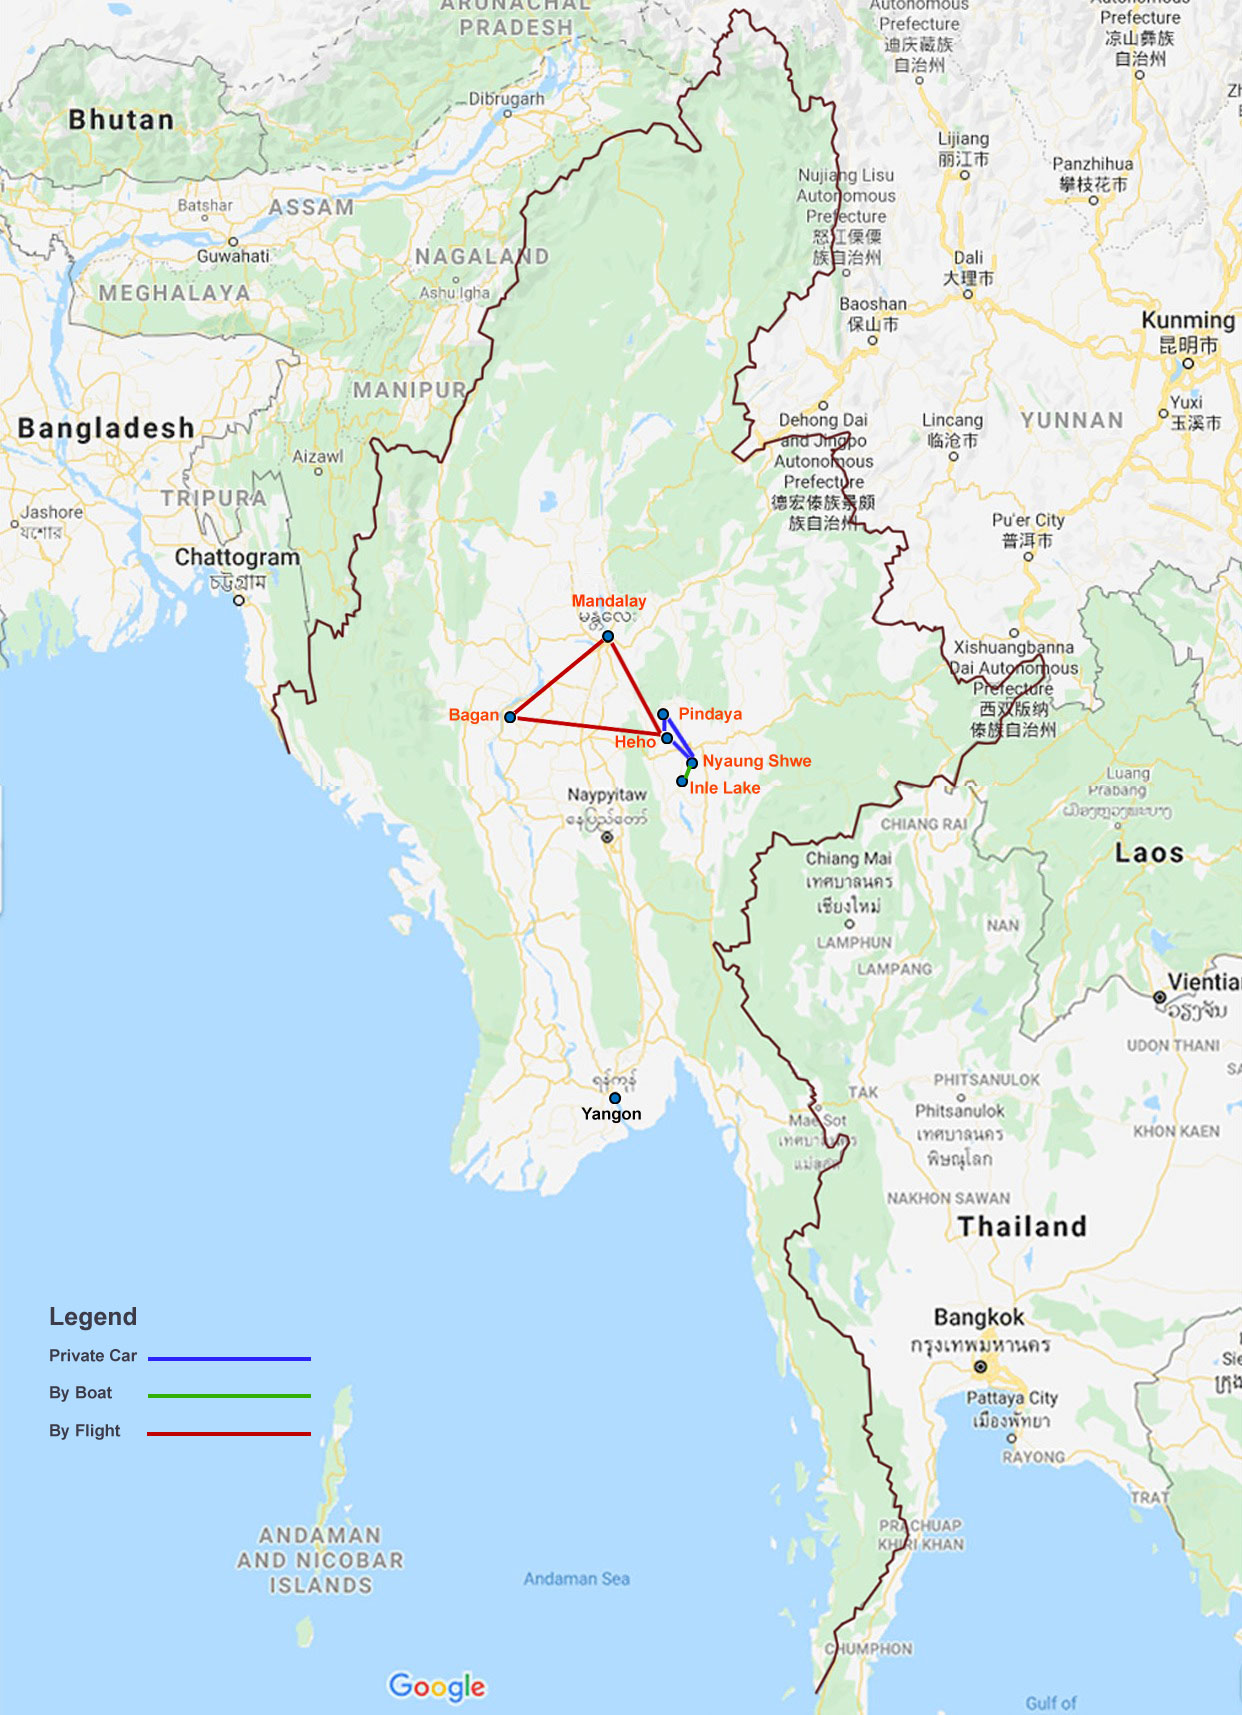 Myanmar-Experiences-8-days